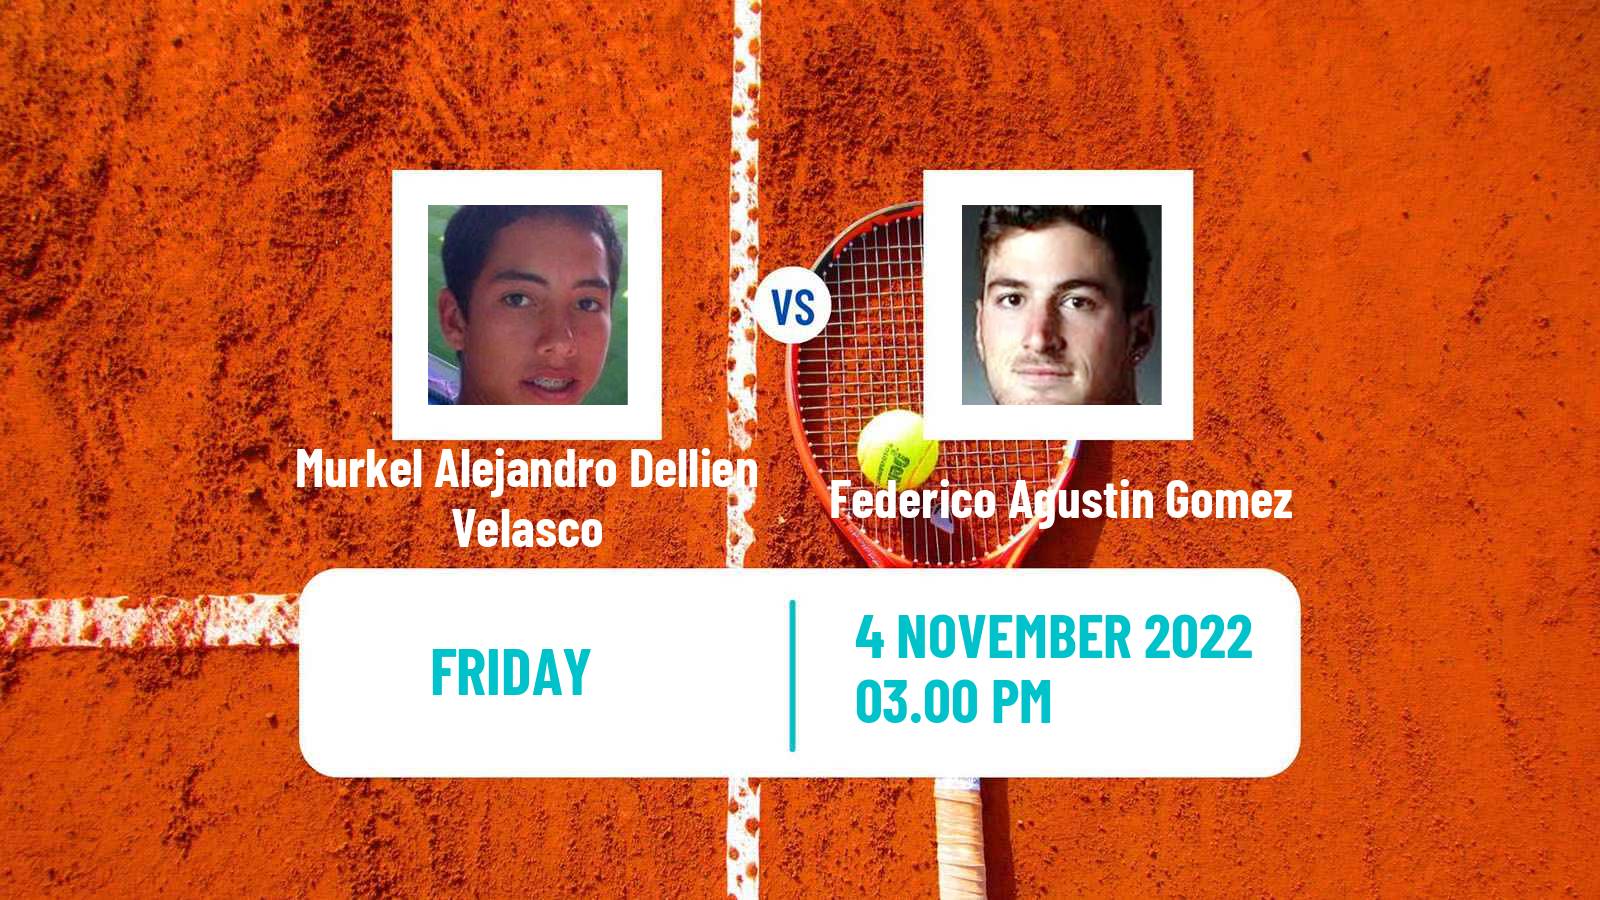 Tennis ITF Tournaments Murkel Alejandro Dellien Velasco - Federico Agustin Gomez